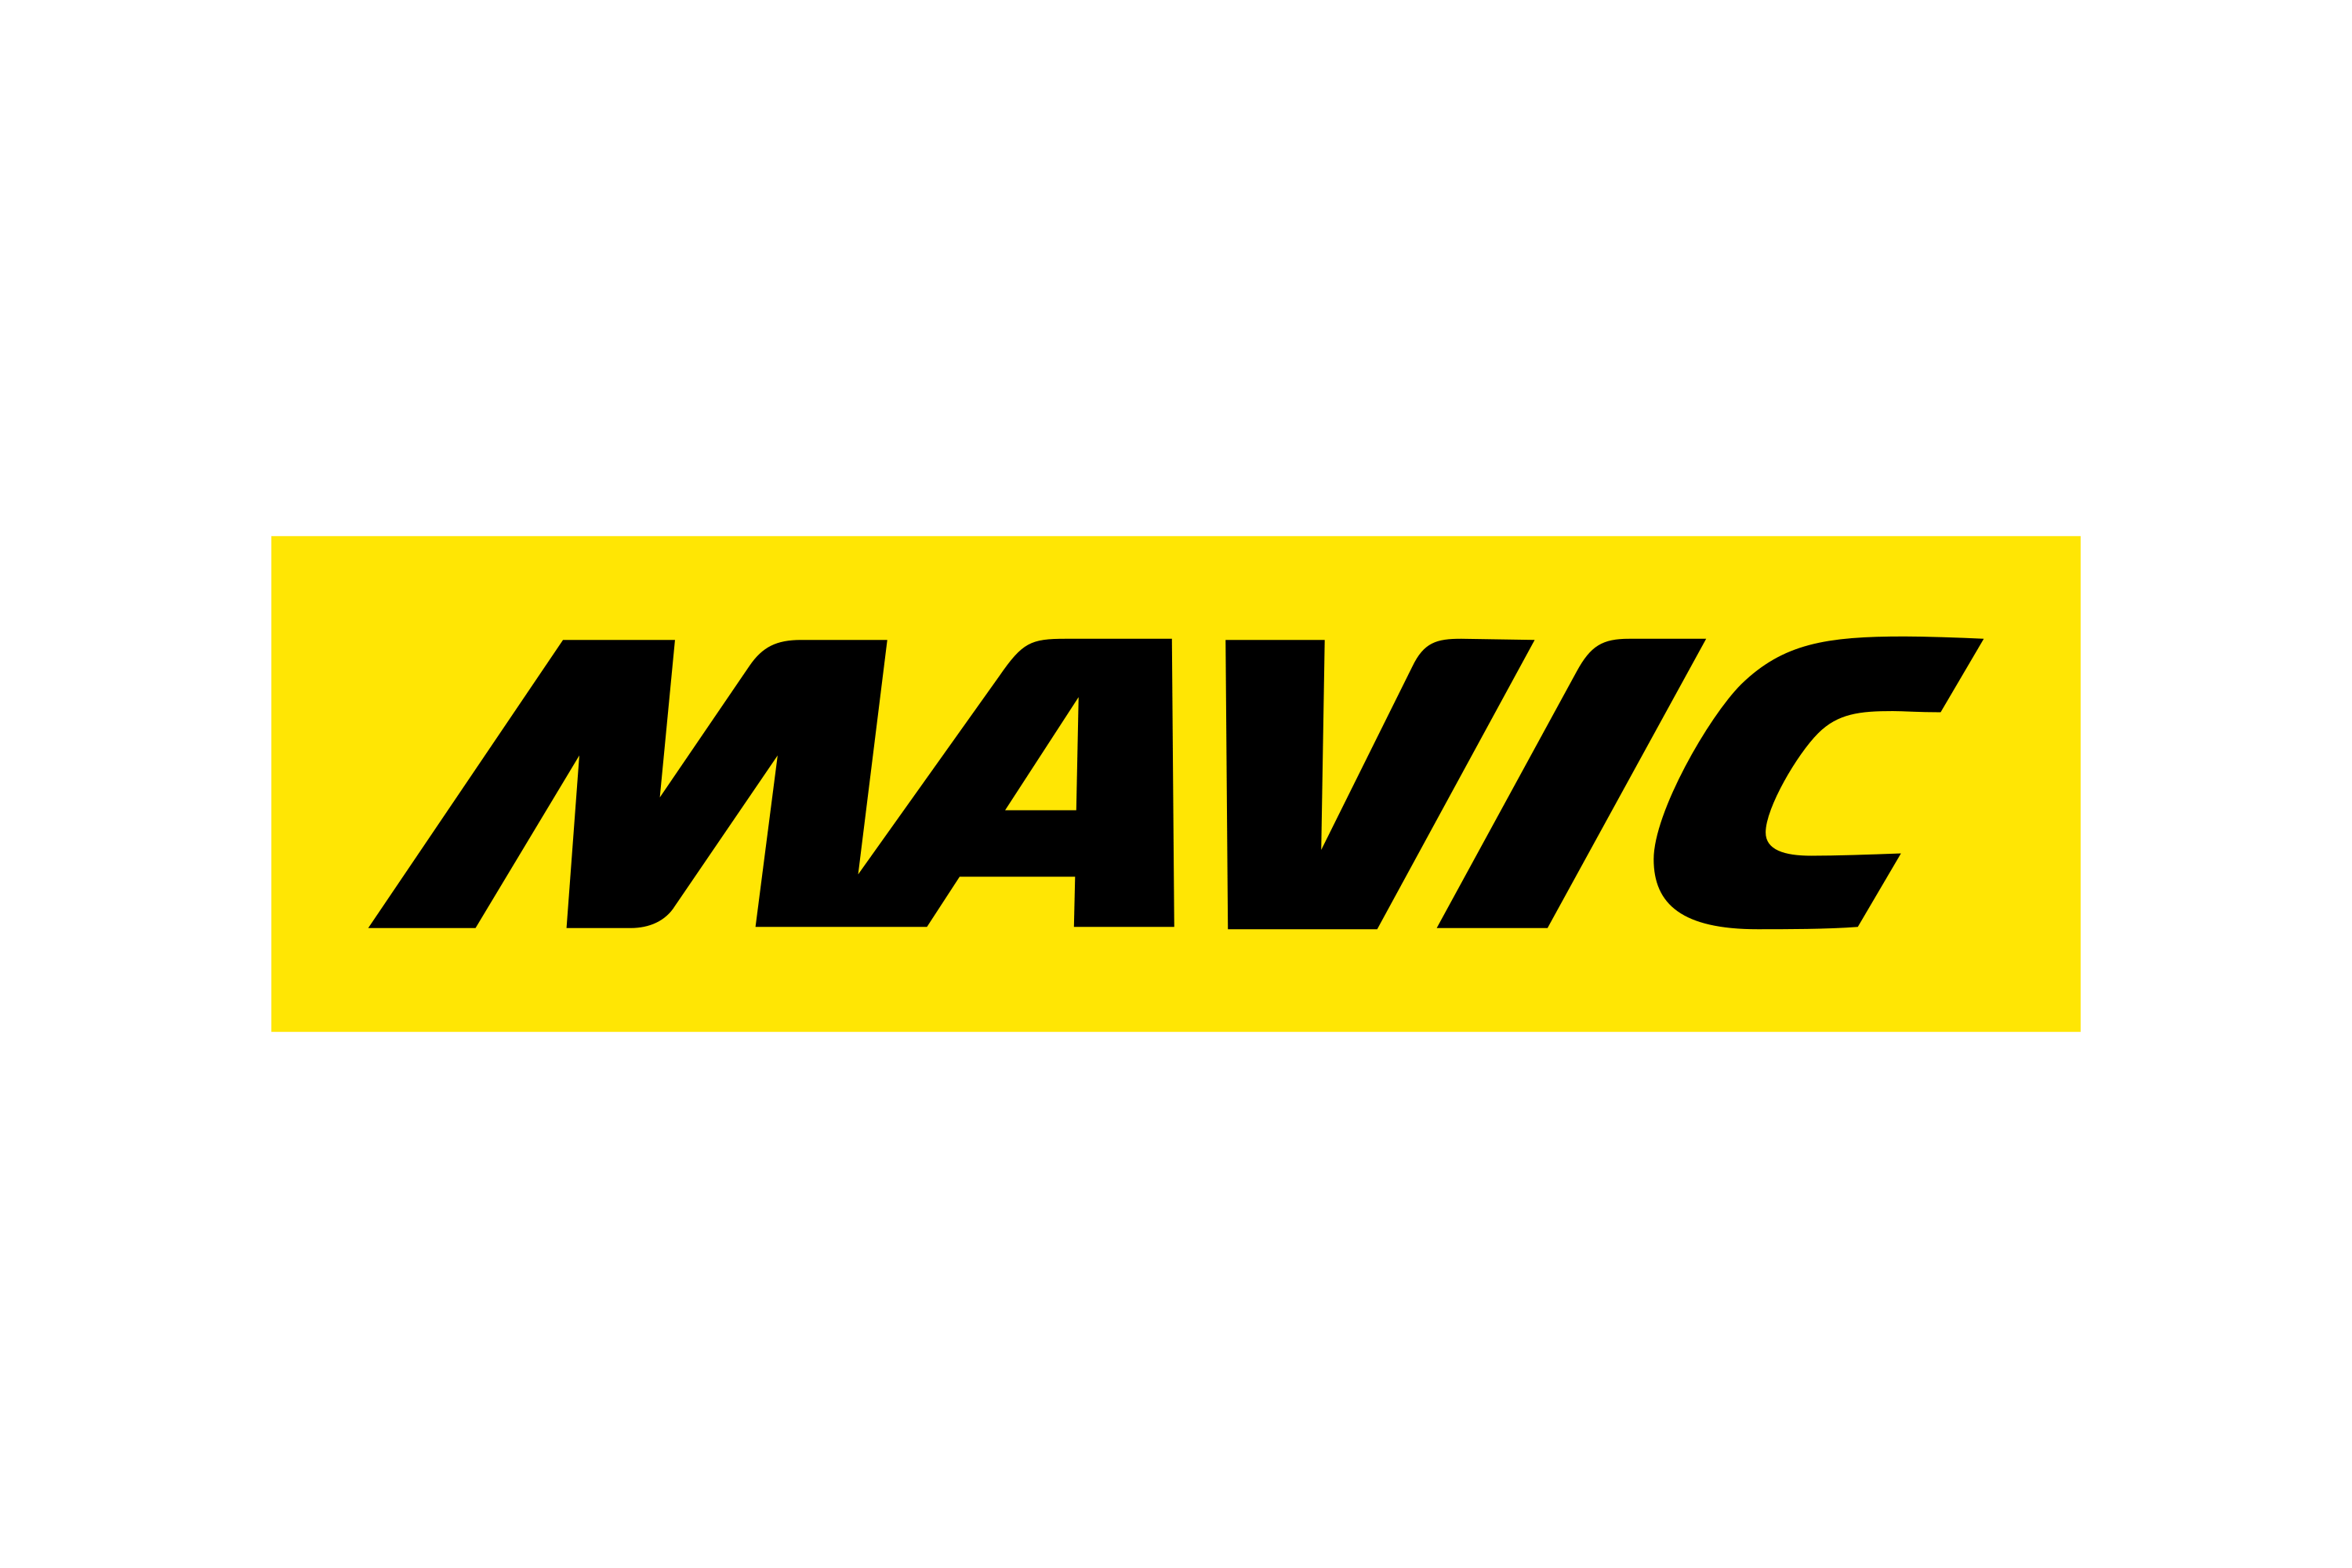 Download Mavic Logo in SVG Vector or PNG File Format - Logo.wine